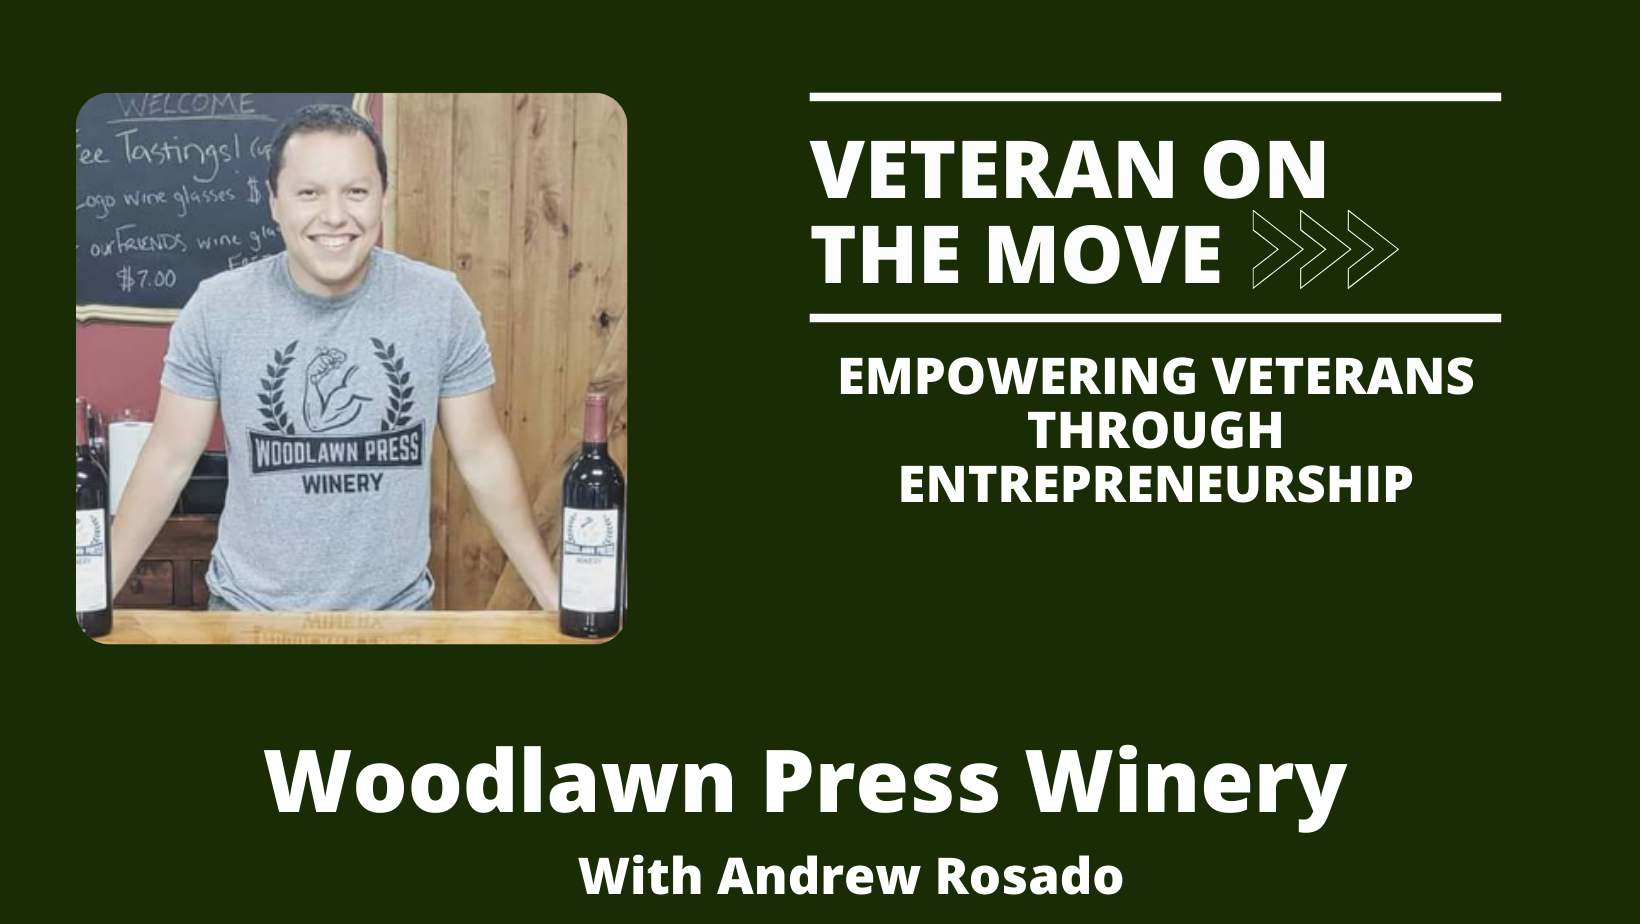 Andrew Rosado, Veteran On The Move